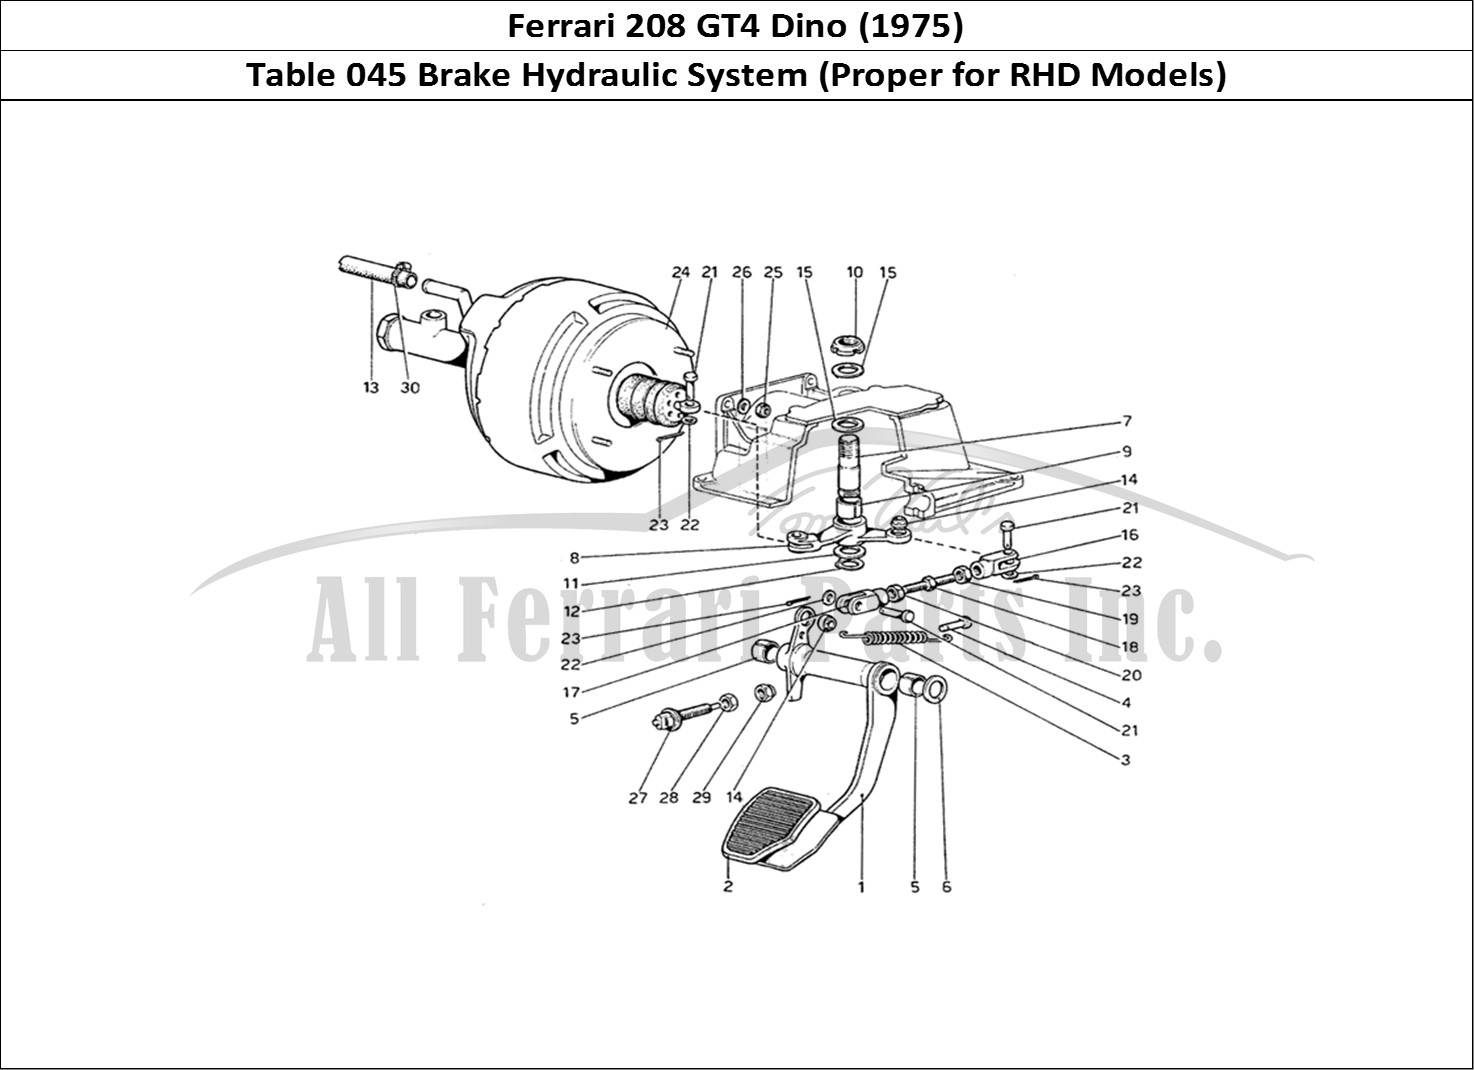 Ferrari Parts Ferrari 208 GT4 Dino (1975) Page 045 Brake Hydraulic System (V